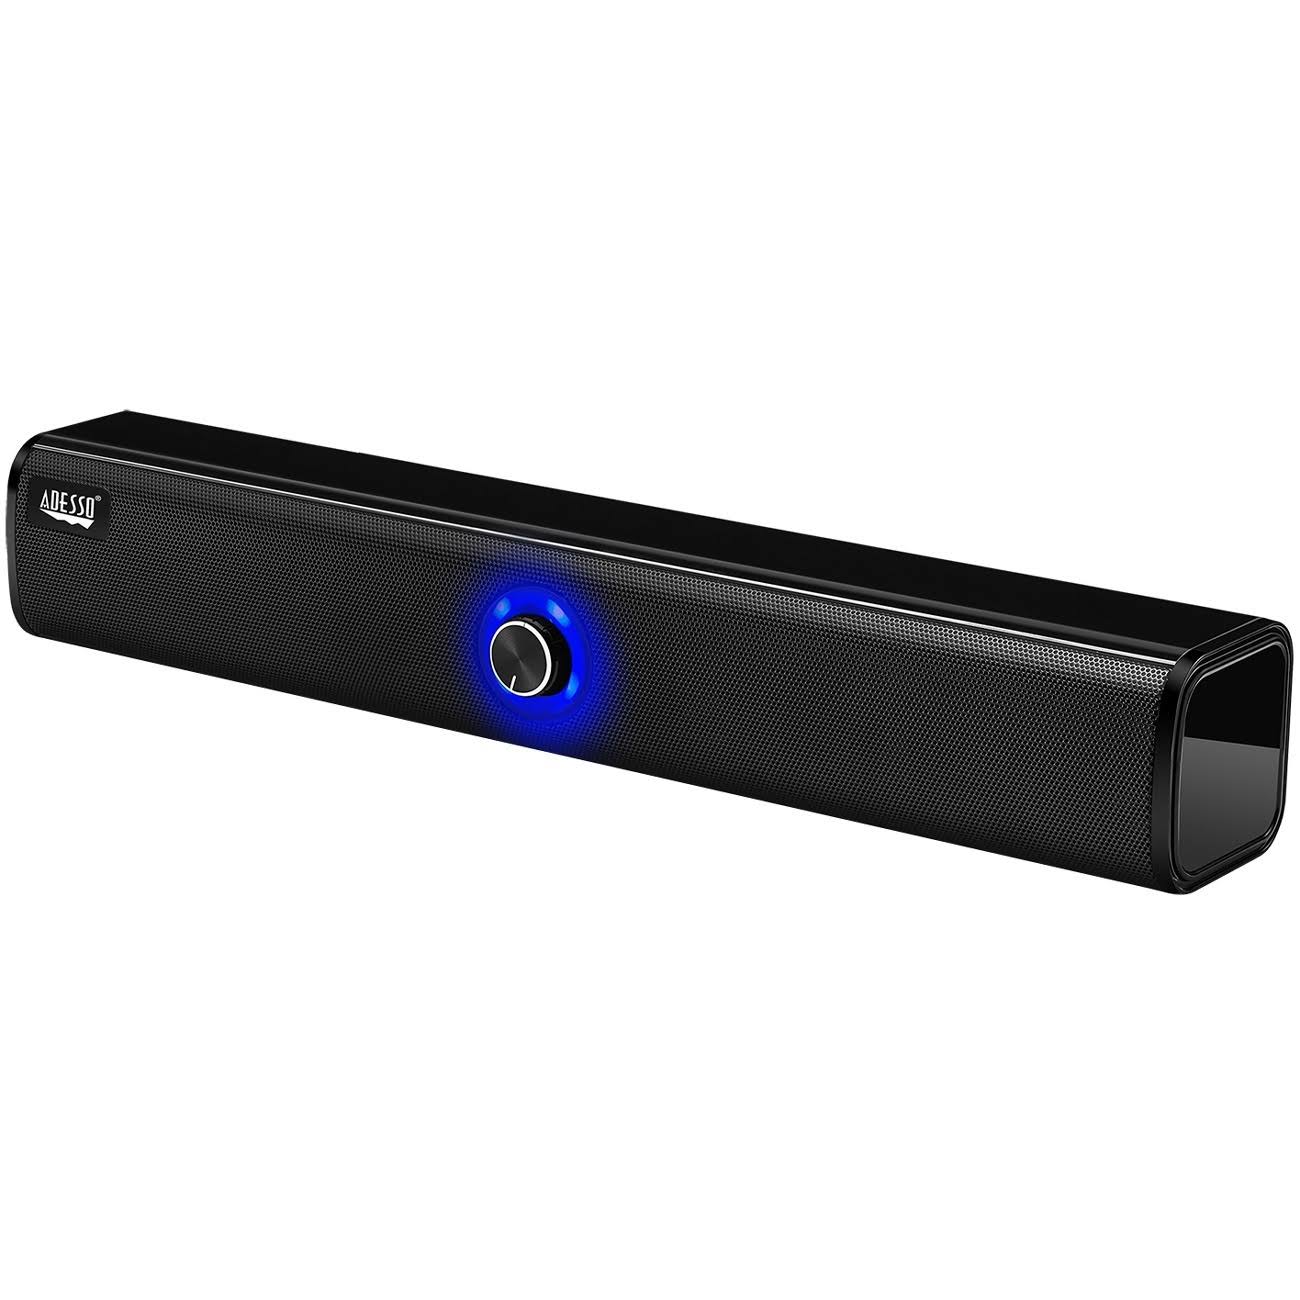 Adesso Xtream S6 Portable Bluetooth Sound Bar Speaker - Black